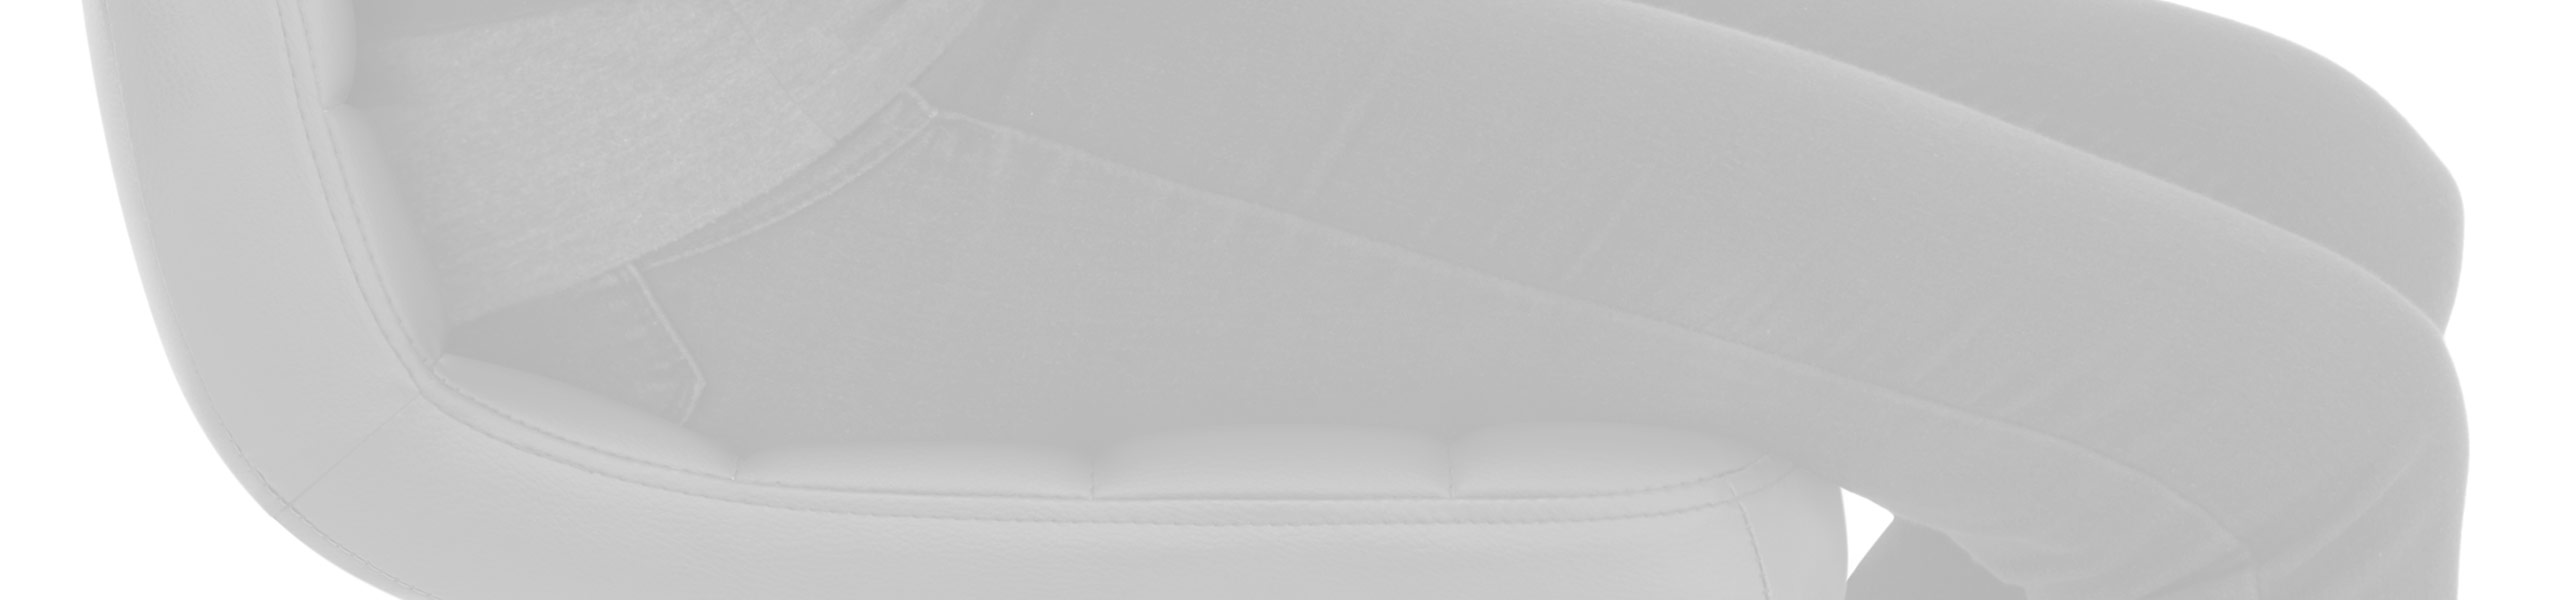 Nexus Bar Stool Grey Review Banner